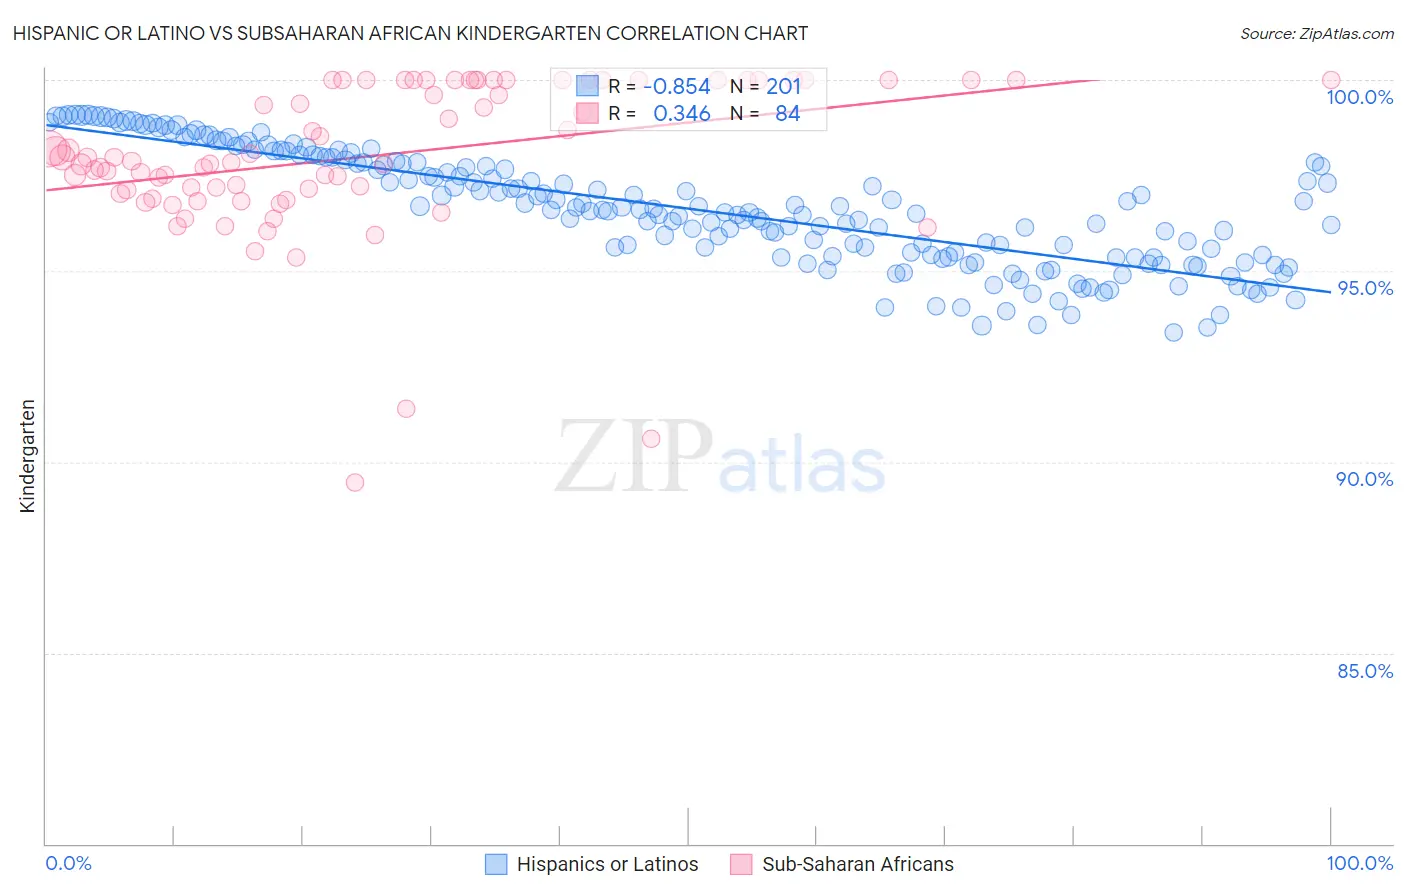 Hispanic or Latino vs Subsaharan African Kindergarten